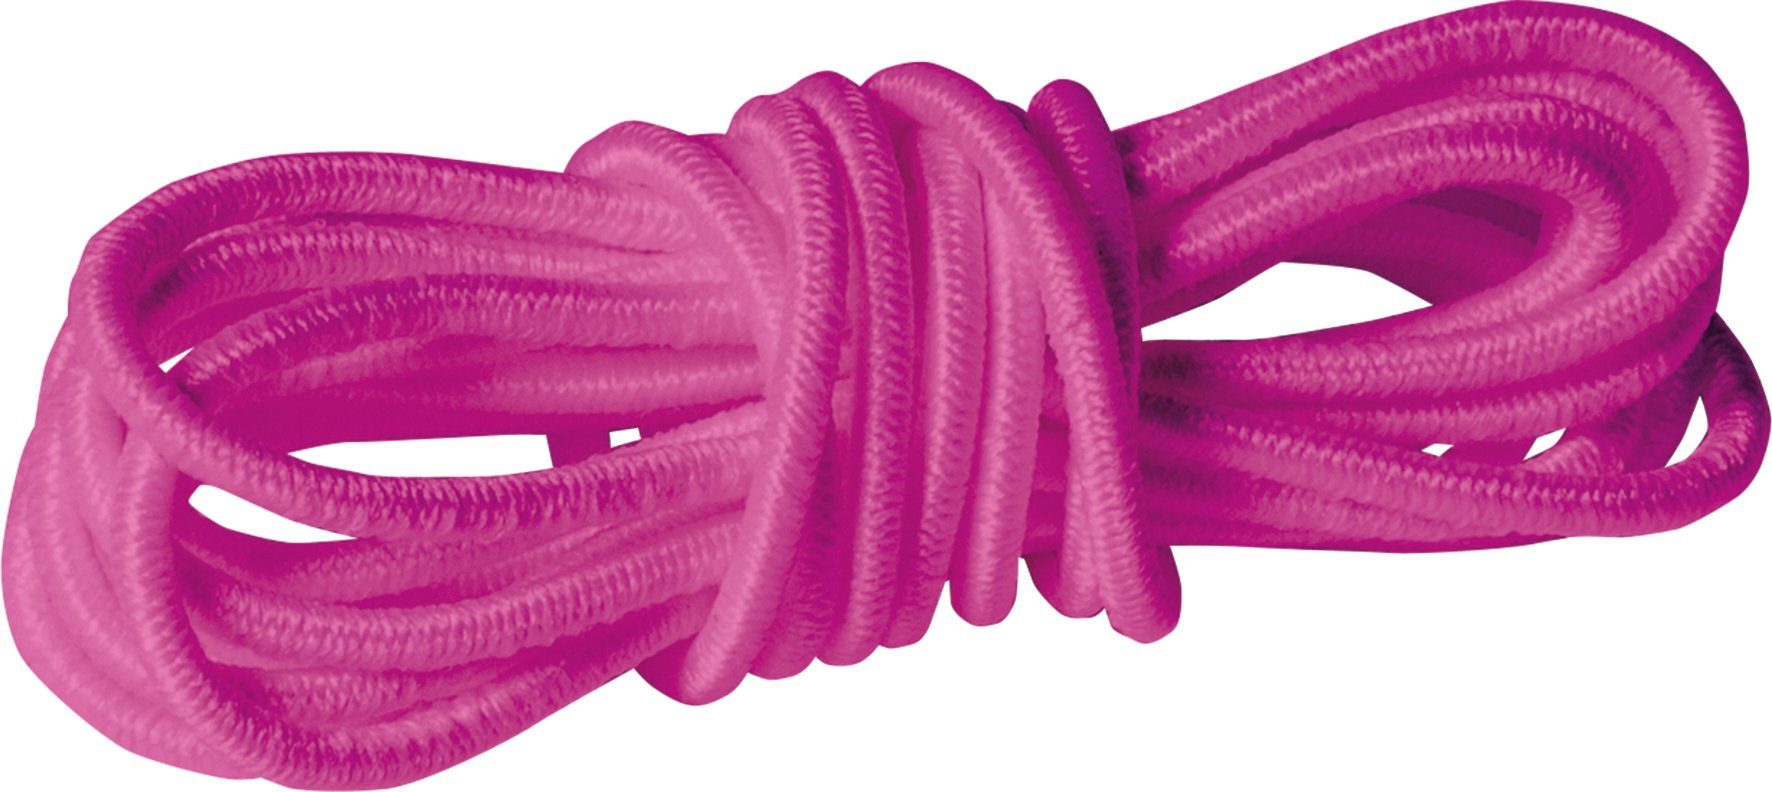 Knorr Prandell Schnuller Schnullerketten Elastikkordel Band, 1,5 m lang Pink